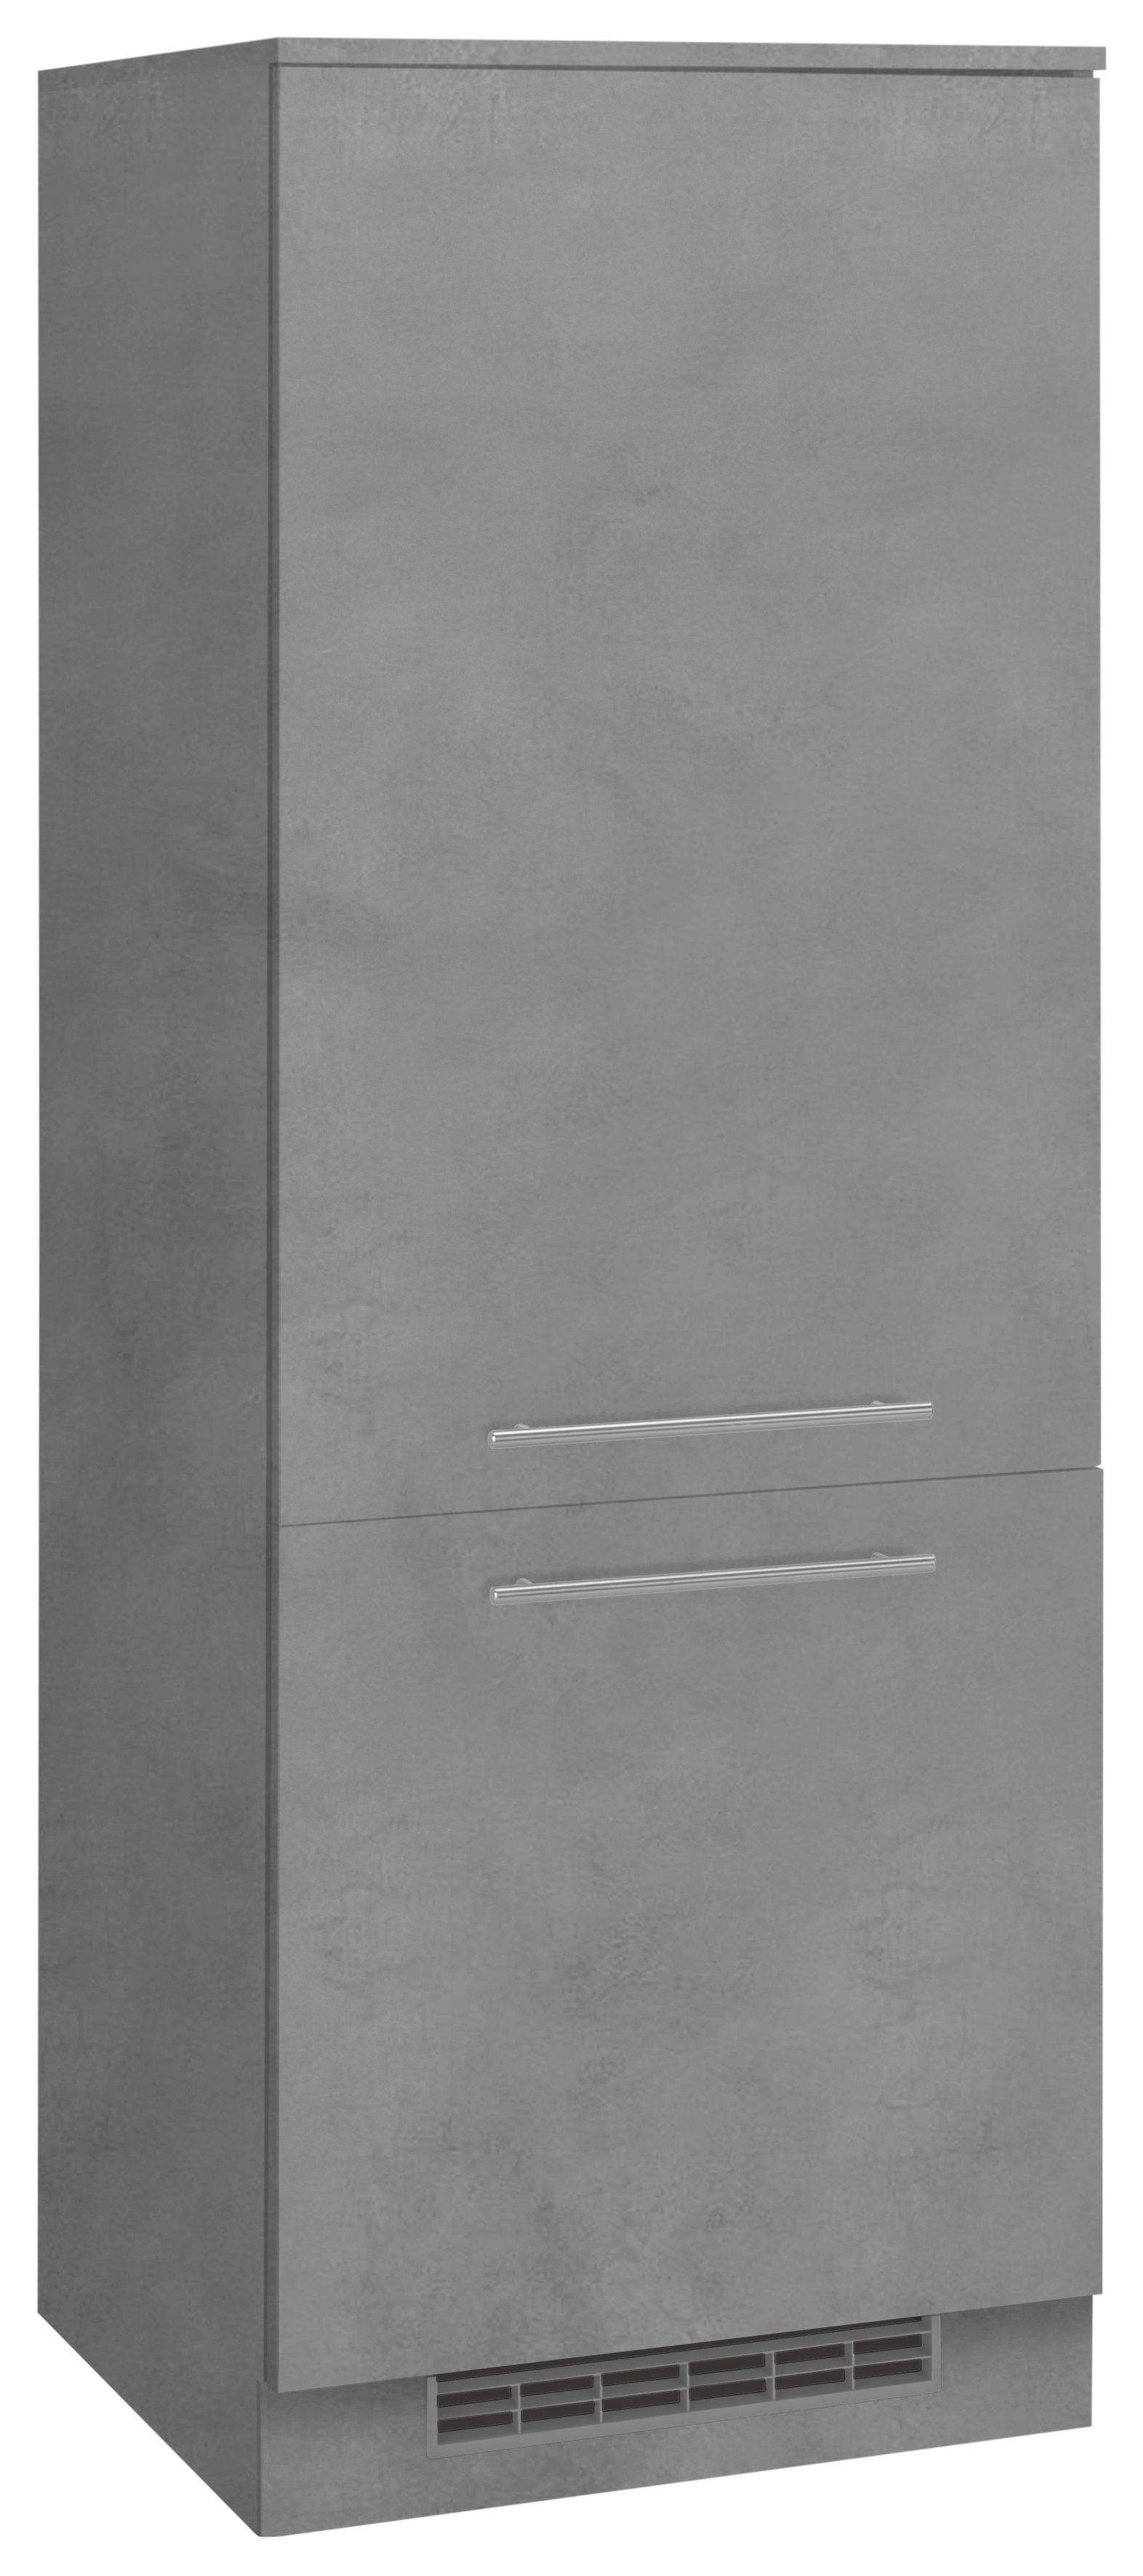 wiho Küchen Kühlumbauschrank Flexi2 betonfarben/betonfarben | Umbauschränke